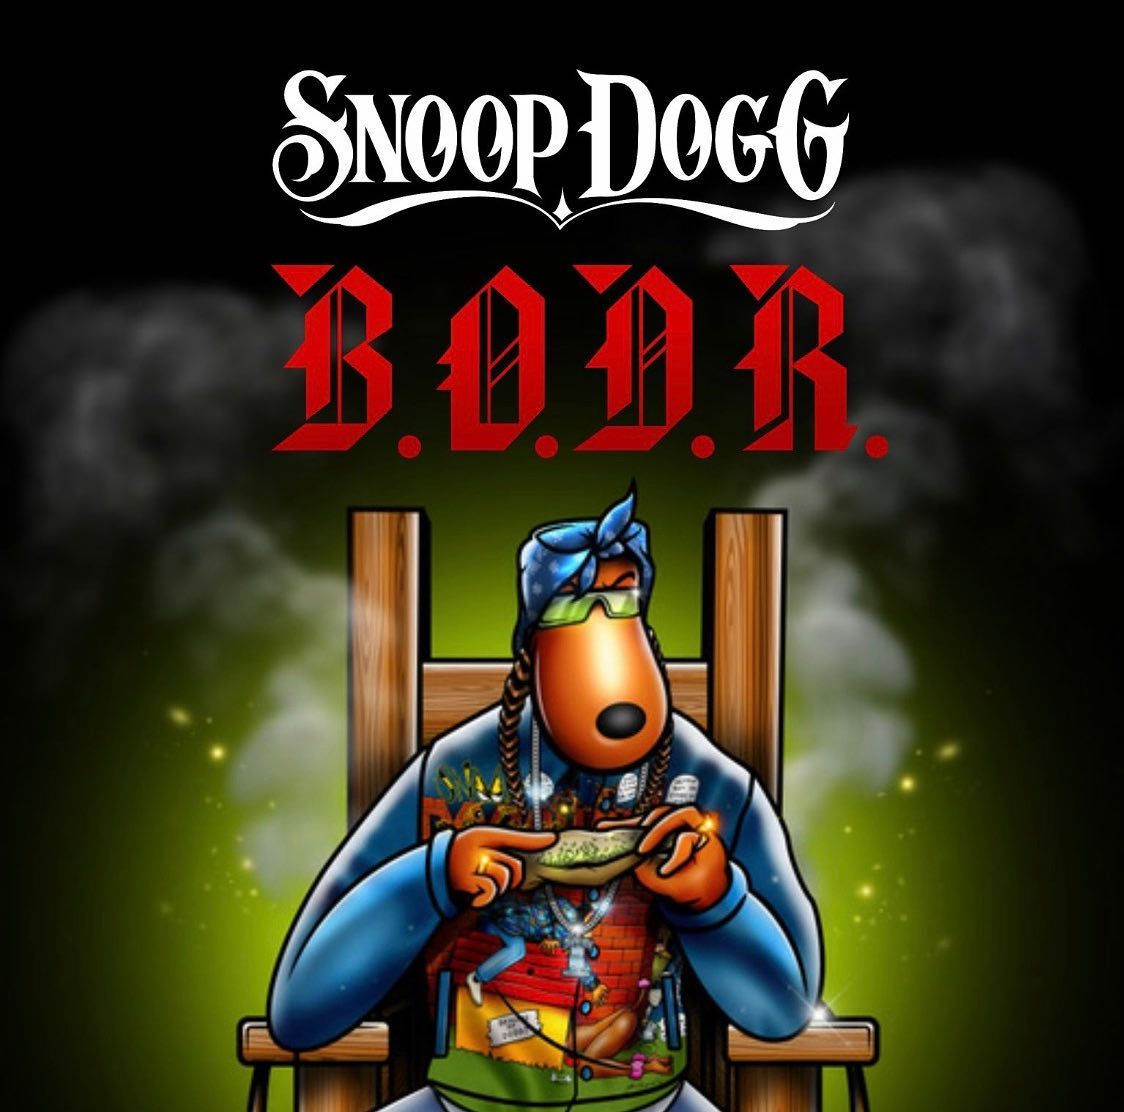 Download Snoop Dogg BODR (Bacc On Death Row) Album ZIP Download